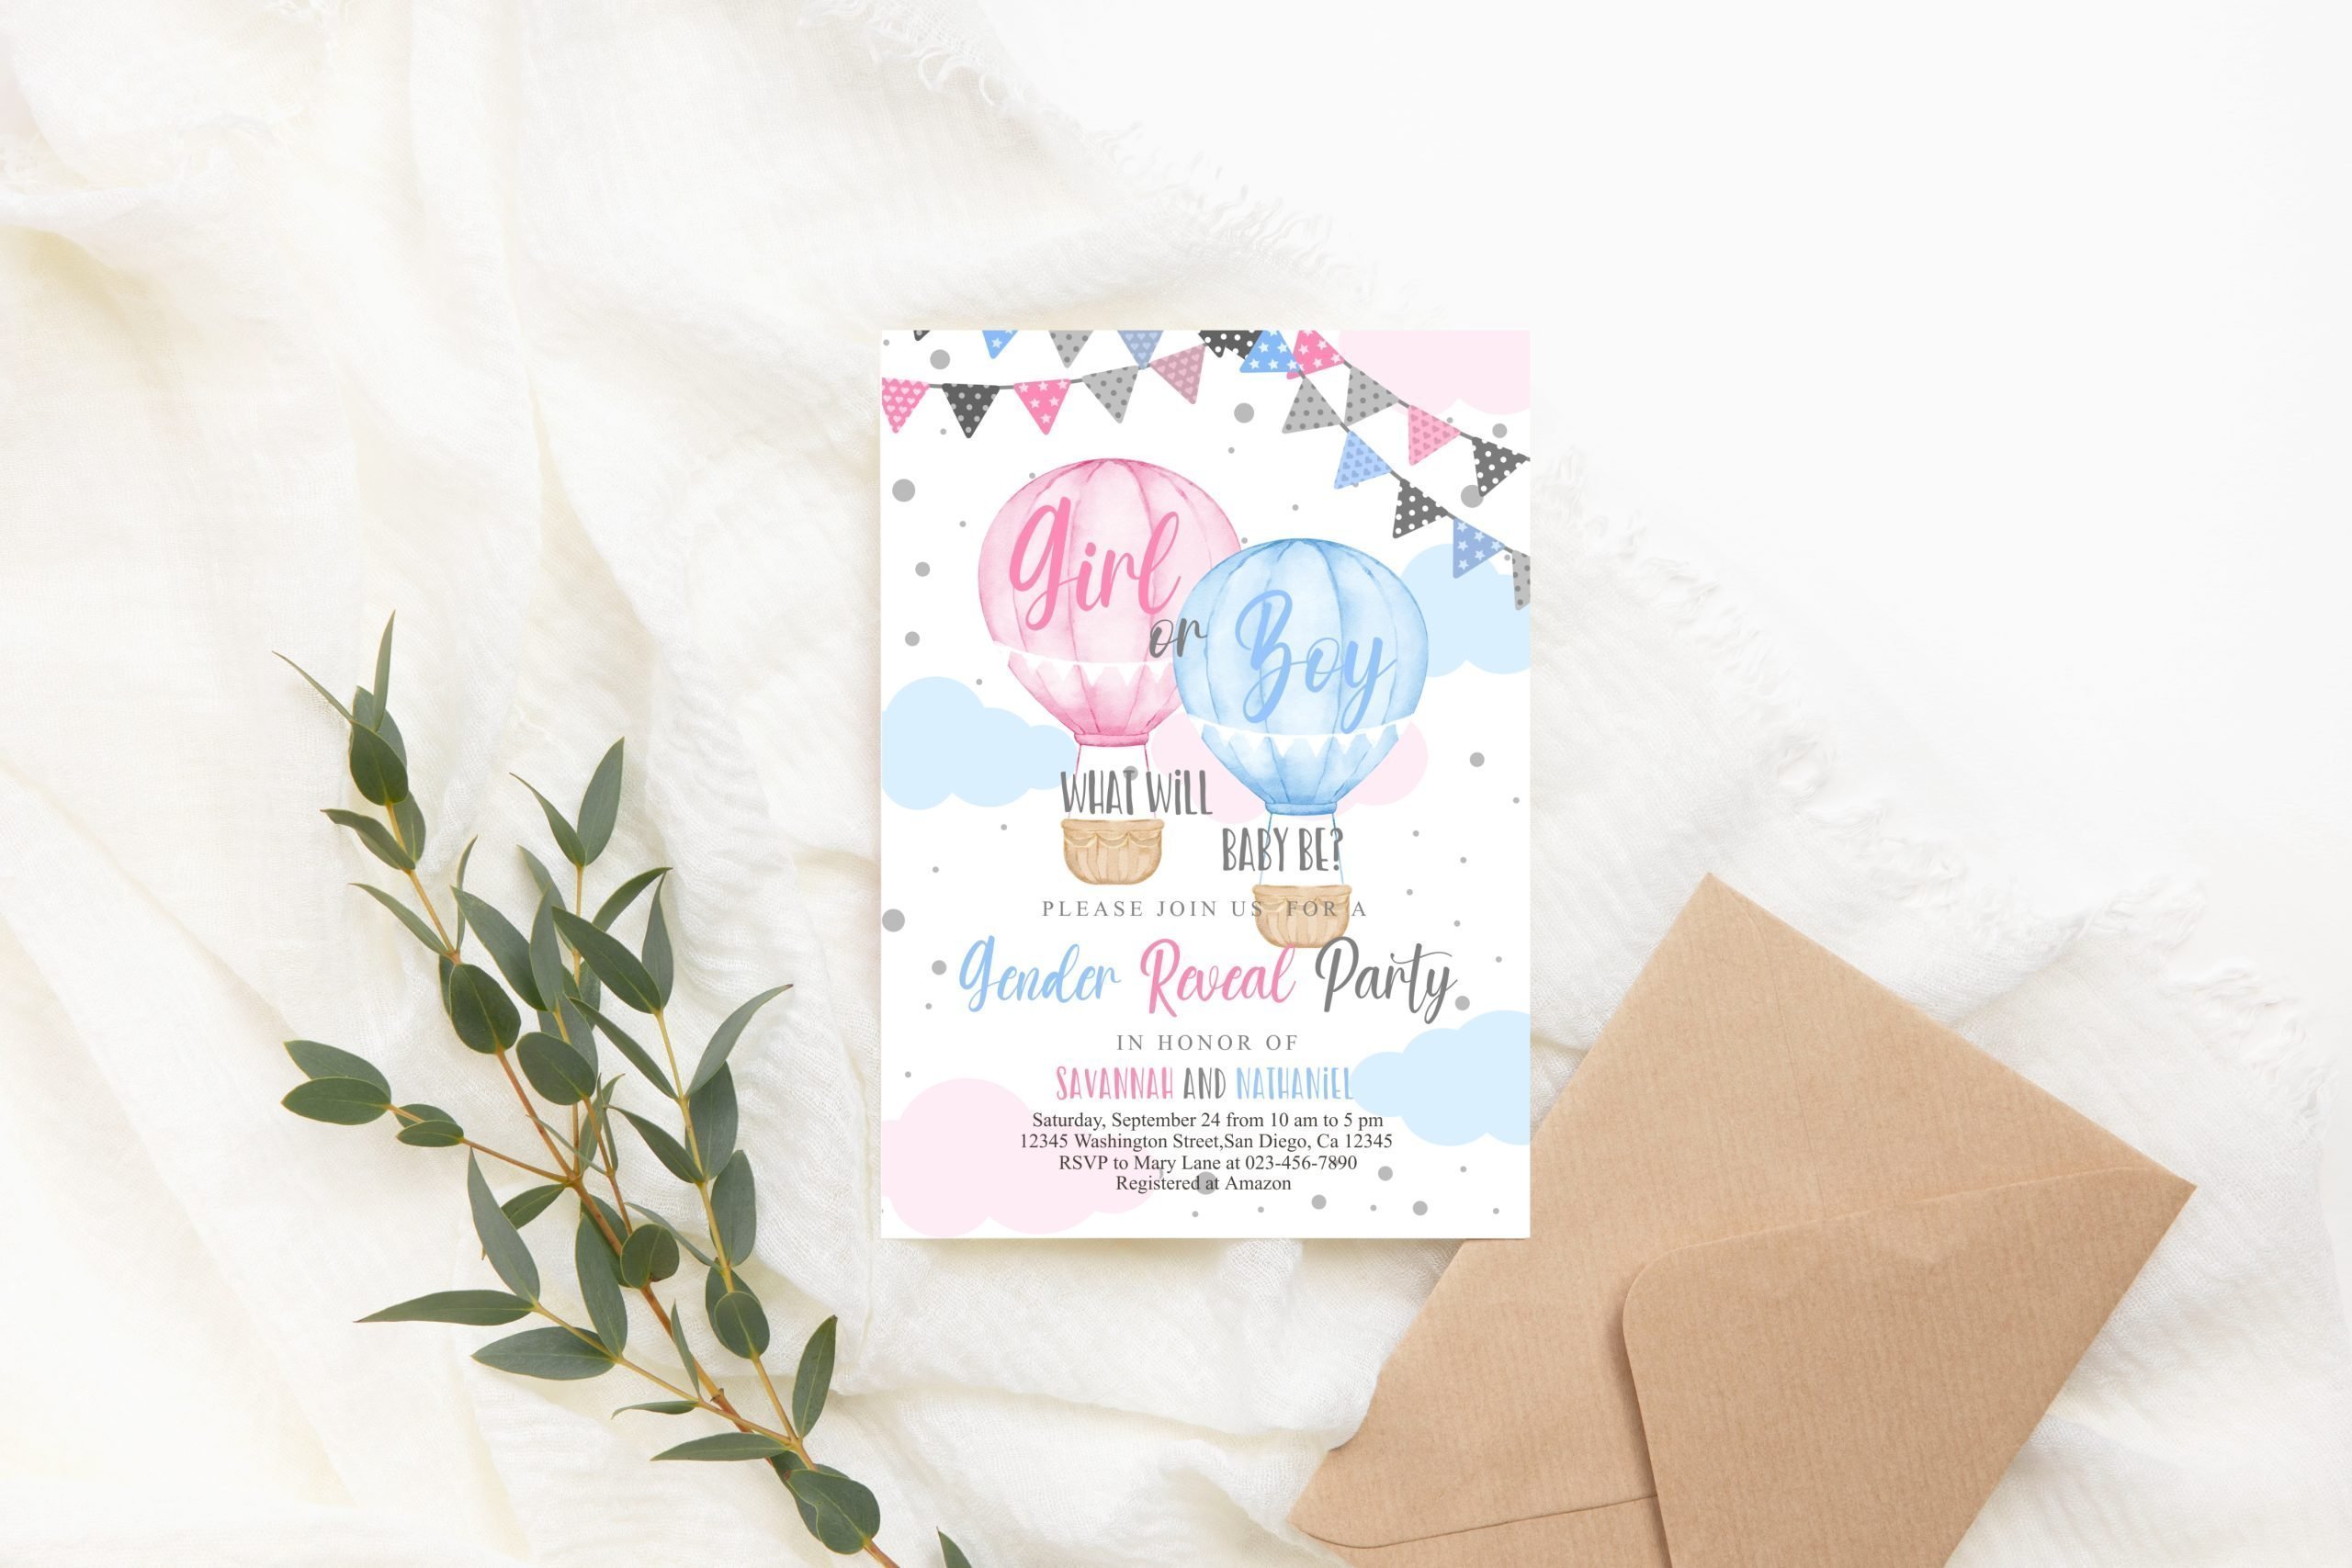 GENDER REVEAL Editable Hot Air Balloon Gender Reveal Invitation – Pink and Blue Hot Air Balloon Party Invite Corjl Template 5x7 Invitation Size